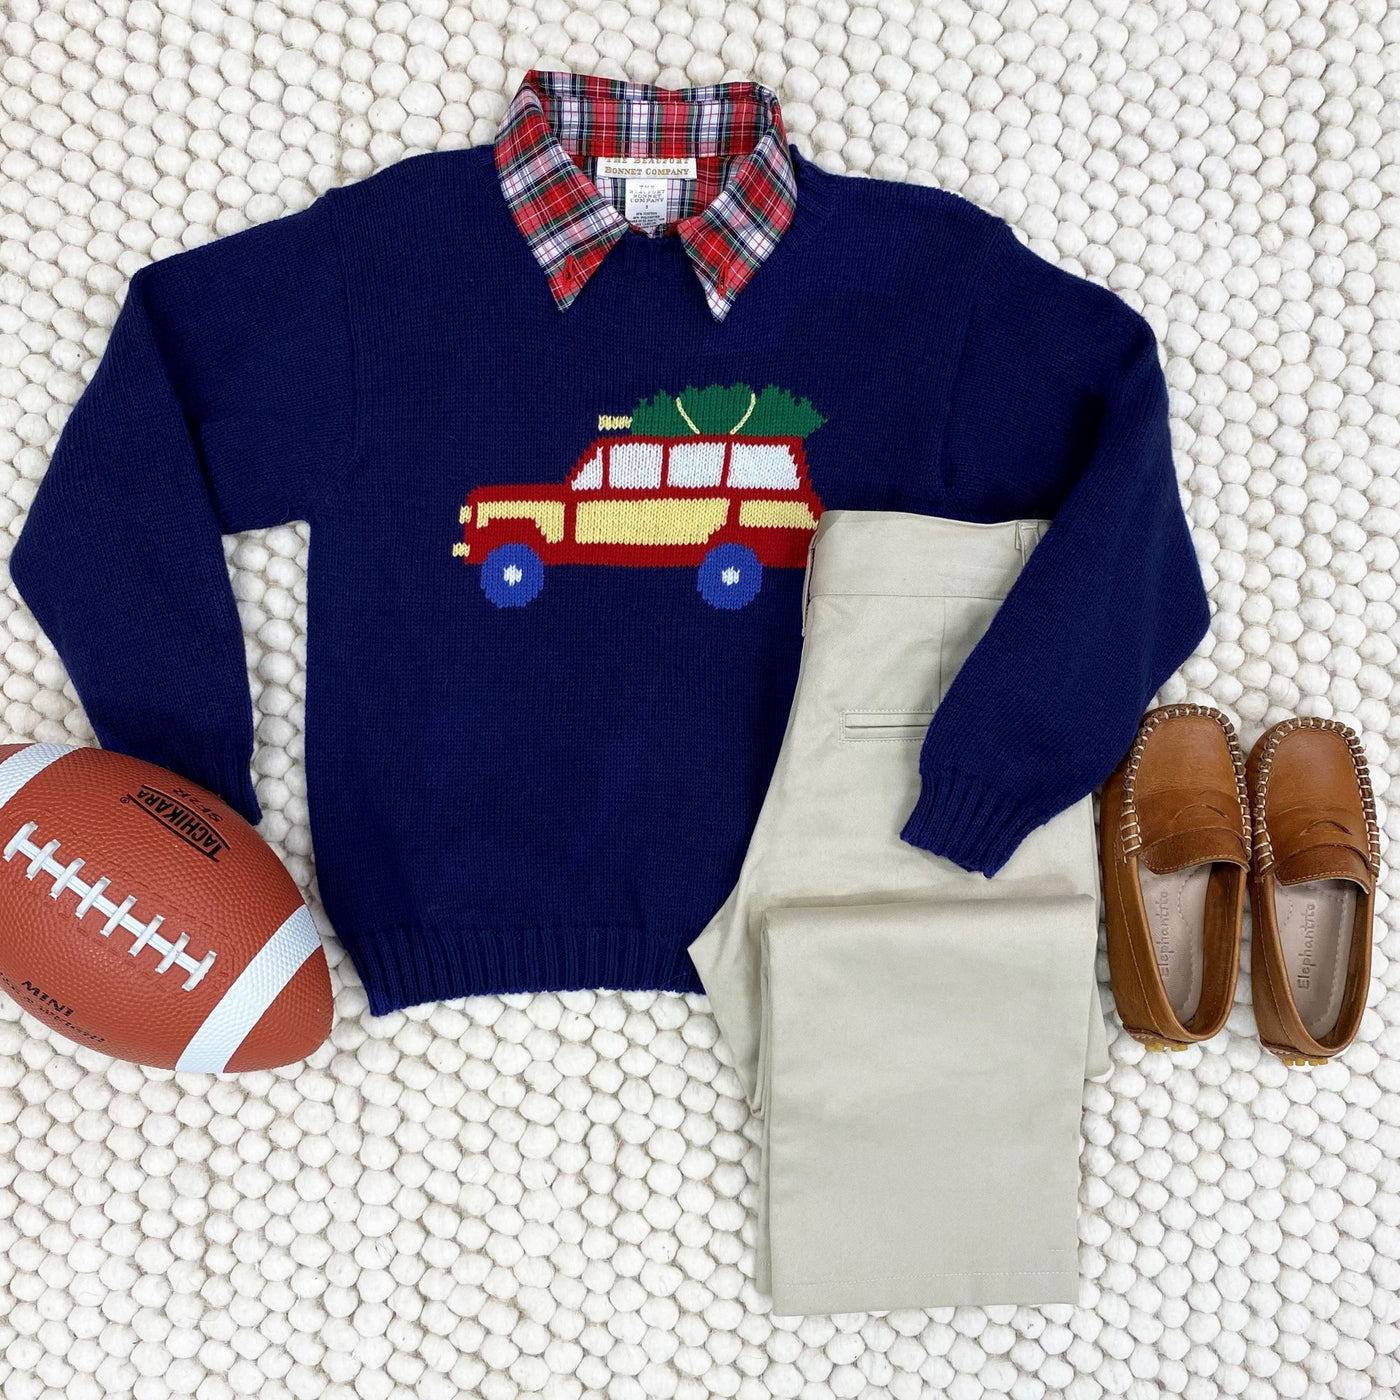 Isaac's Intarsia Sweater - Nantucket Navy/Woody